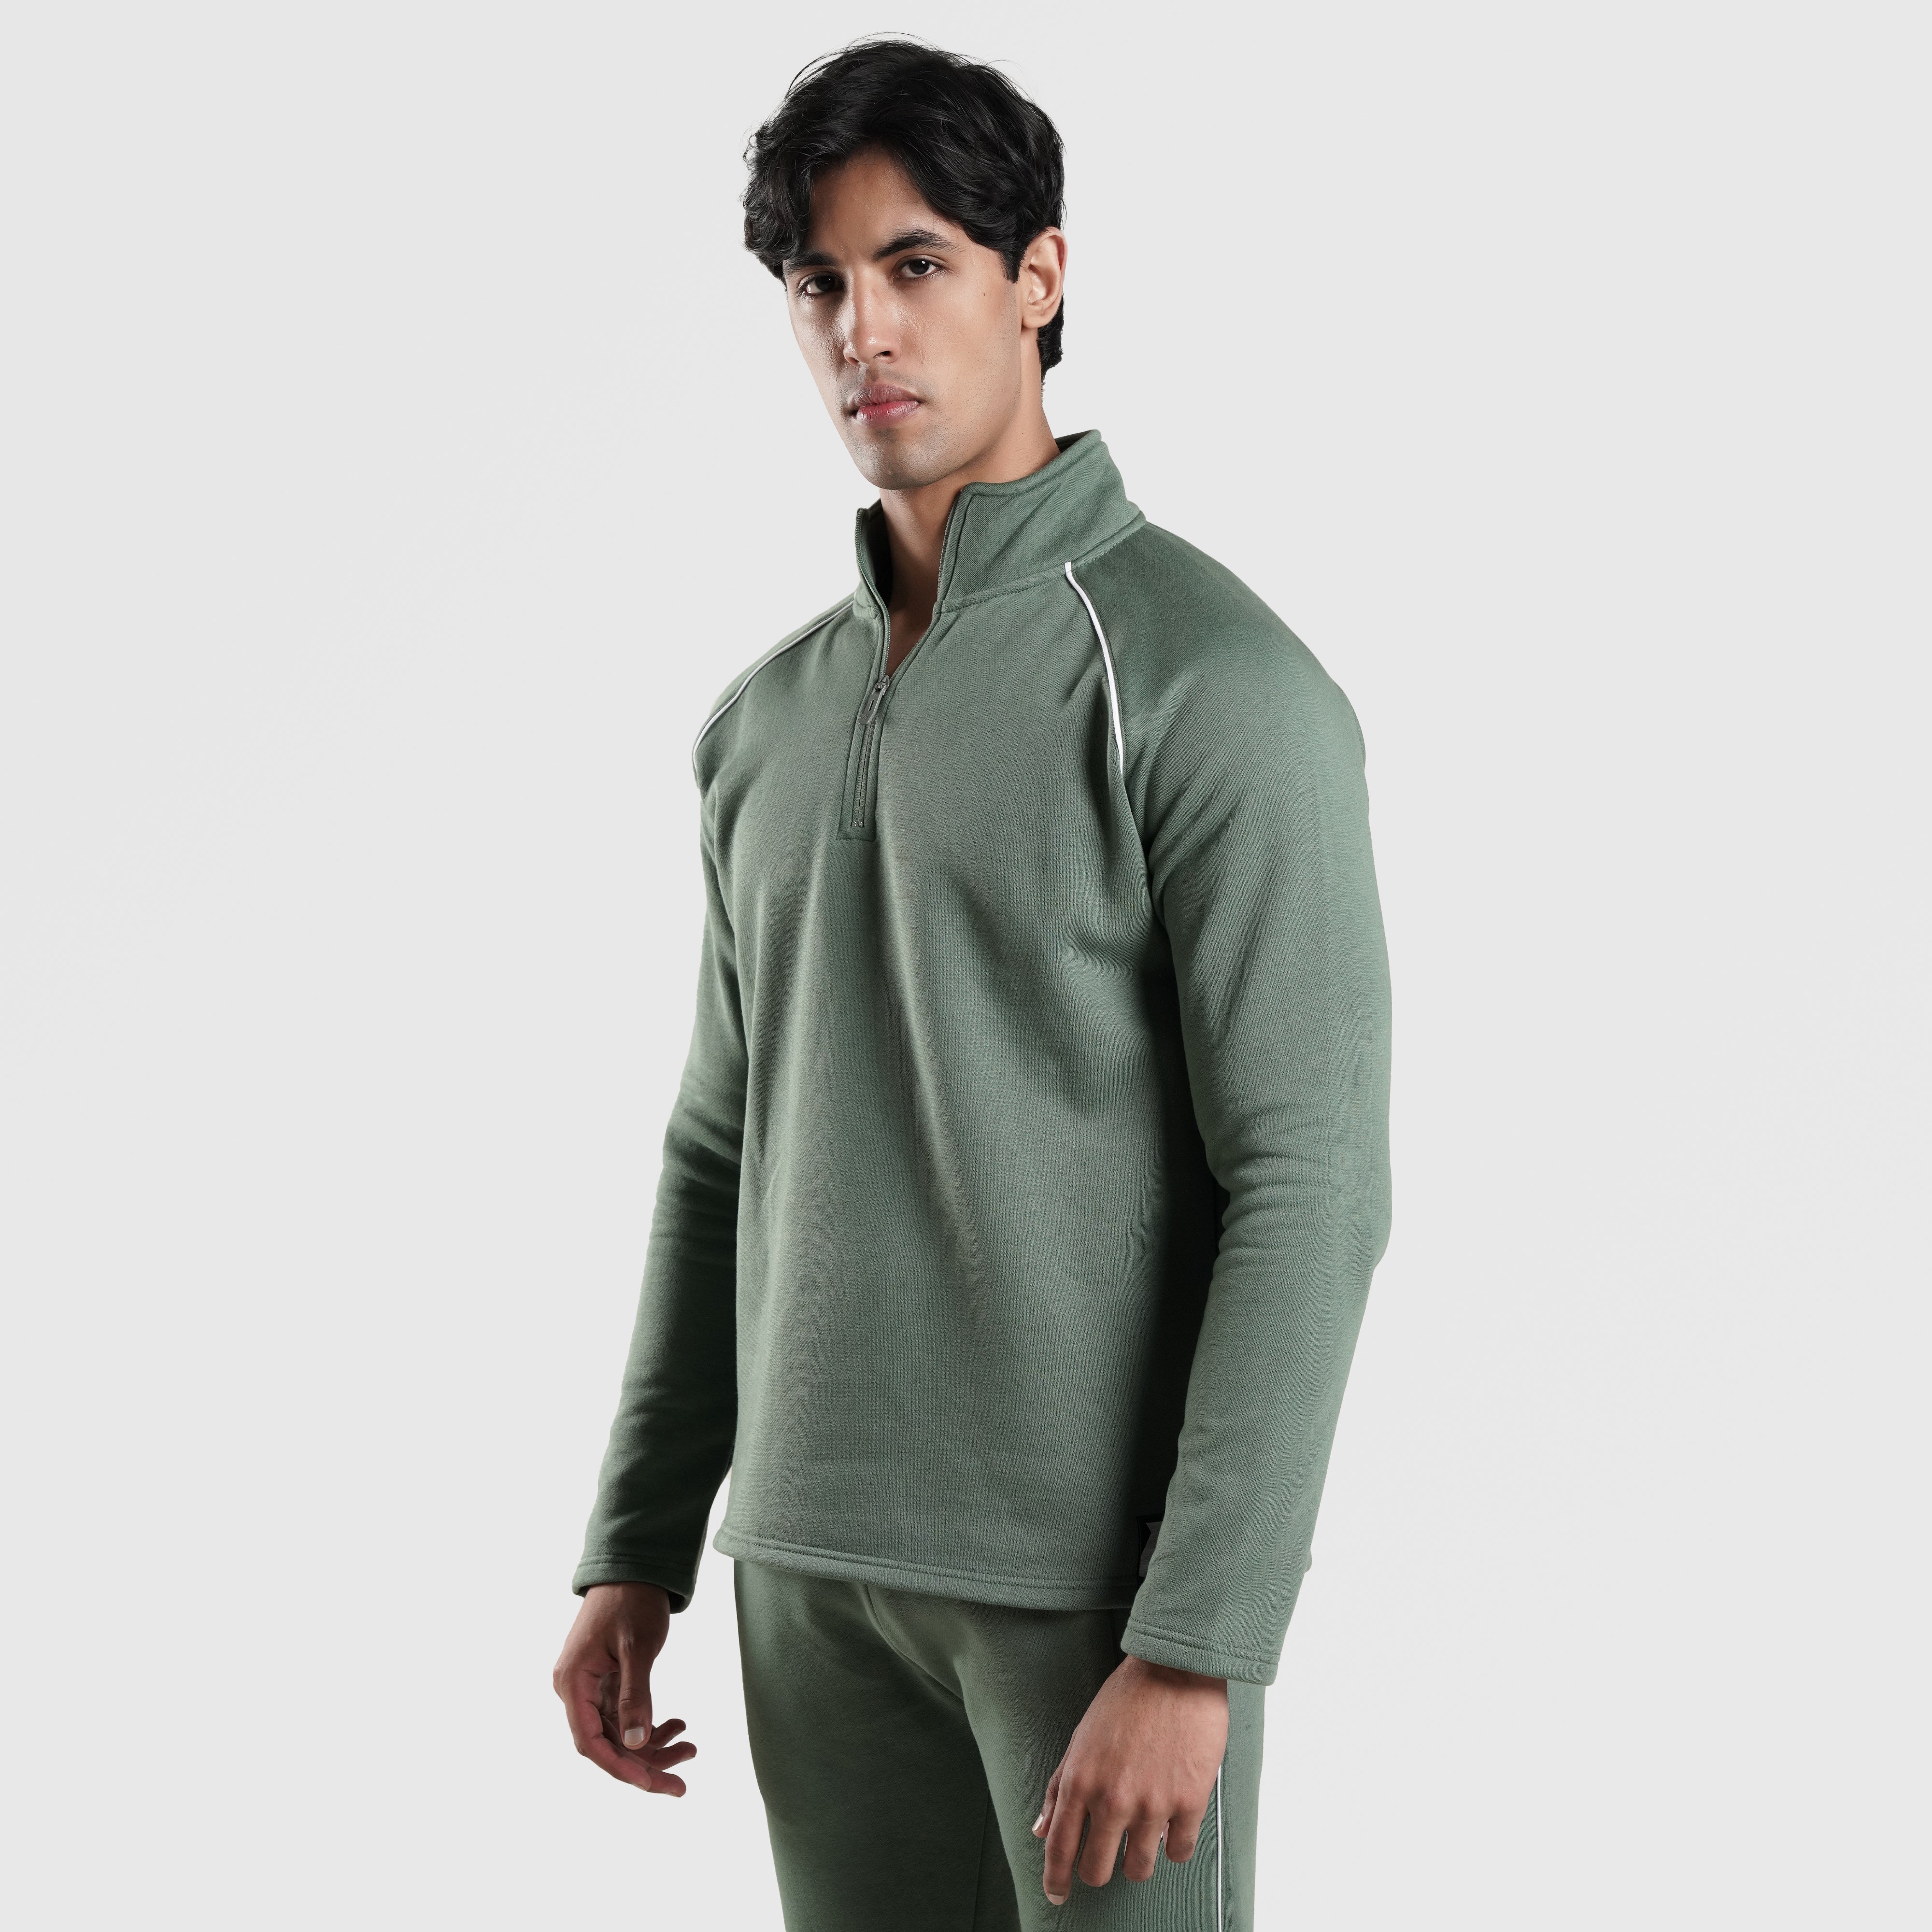 Range Sweatshirt (Green)